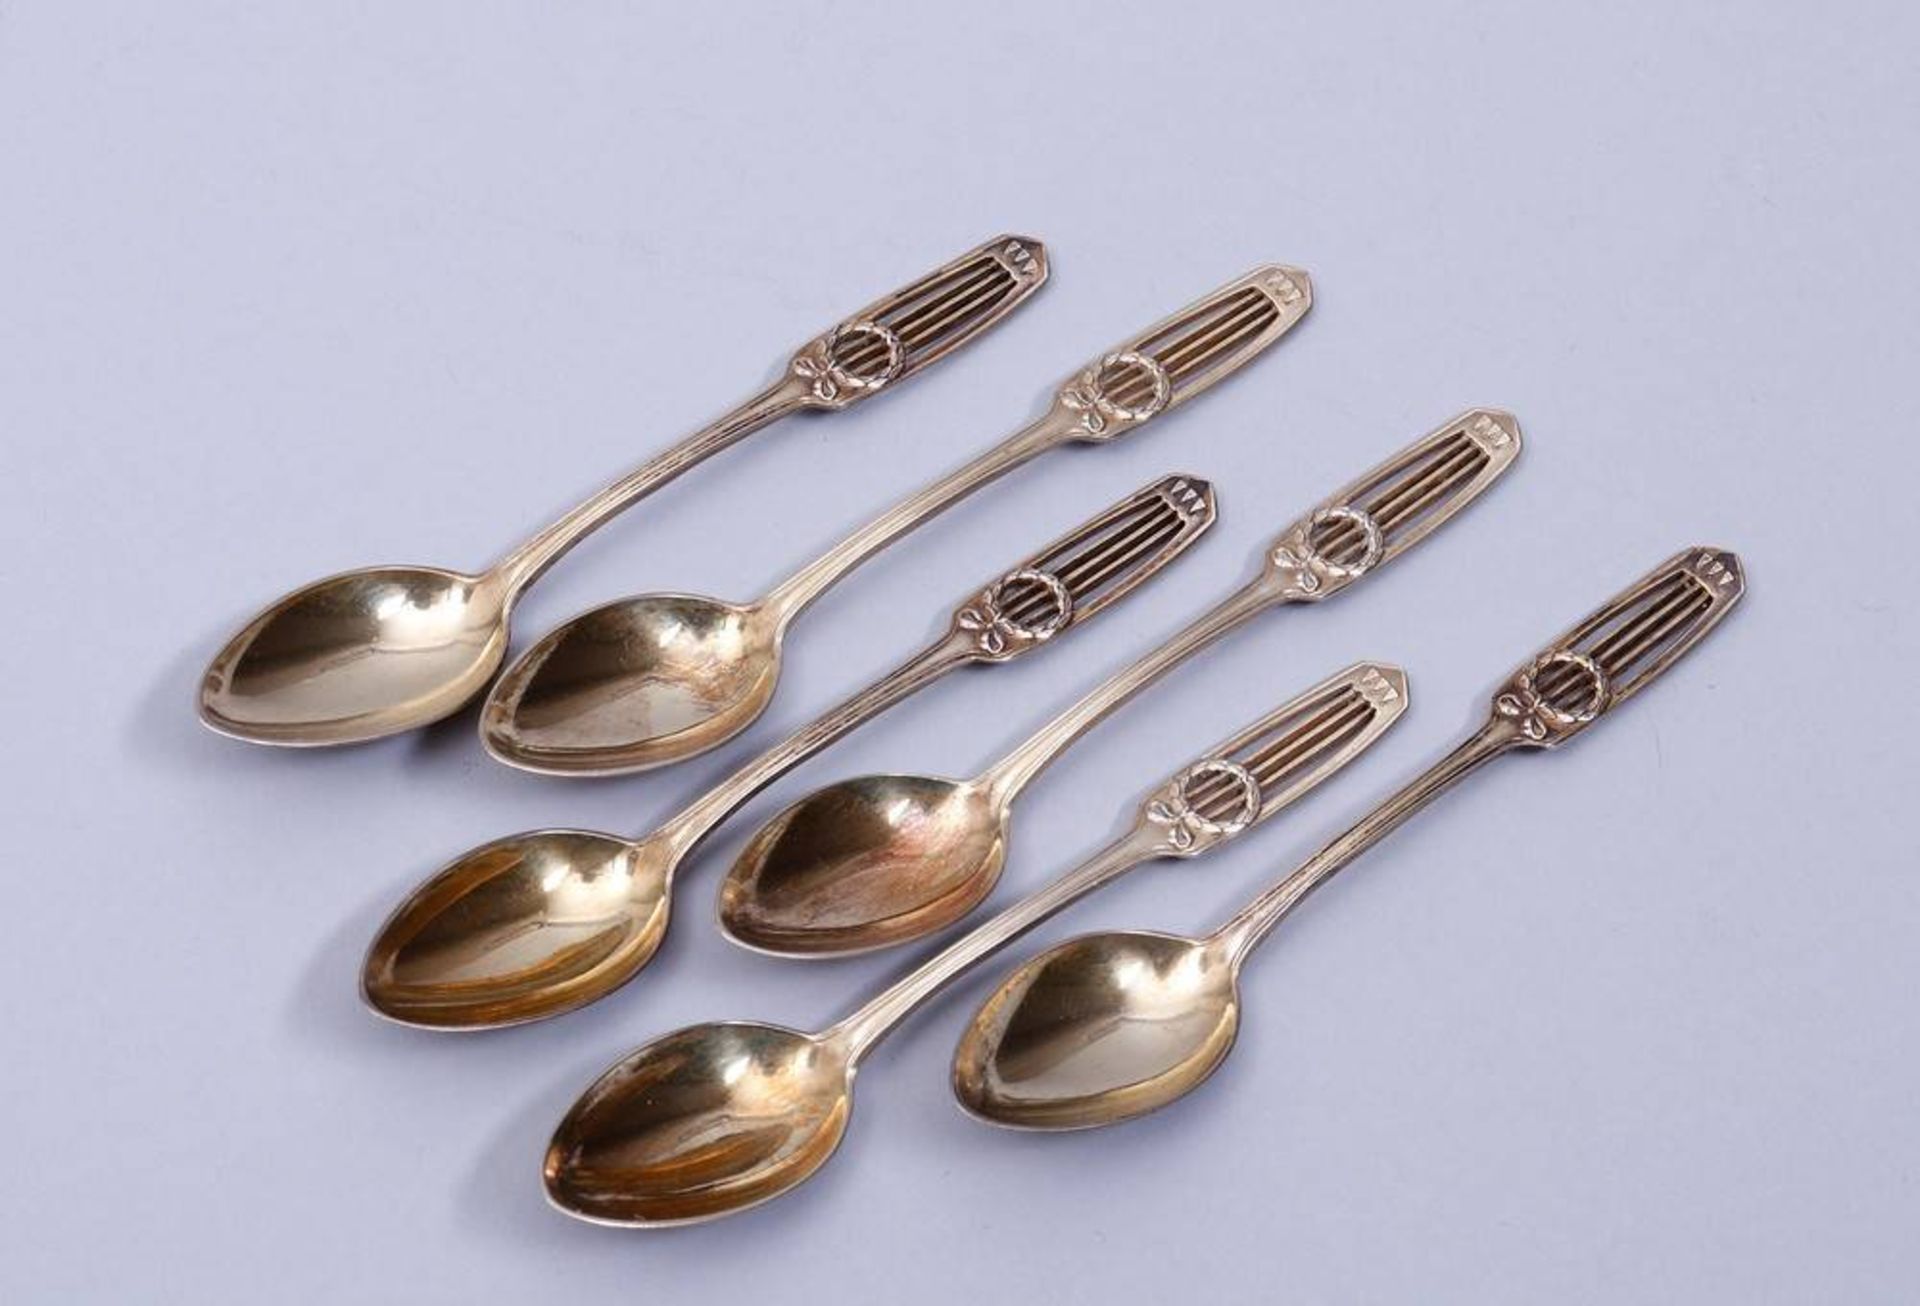 6 Art-Nouveau-Mocca spoons silver gilt, Bruckmann & Söhne, ca. 44,4g in total, L: 9,5cm, signs of